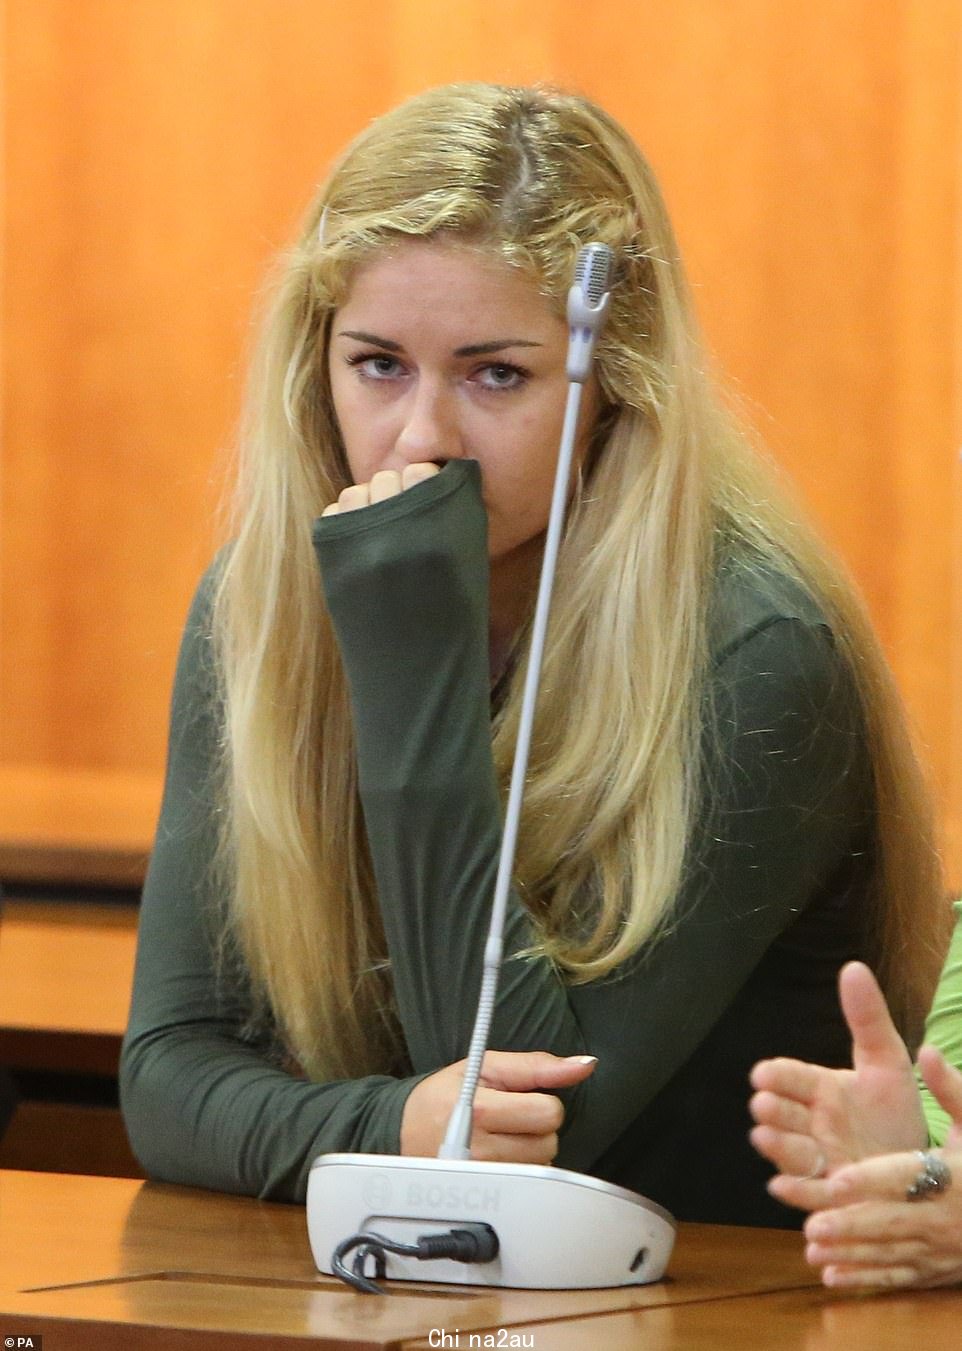  Mayka Kukucova 在西班牙马拉加的法庭上，她被指控杀害了她的前爱英aire Andrew Bush